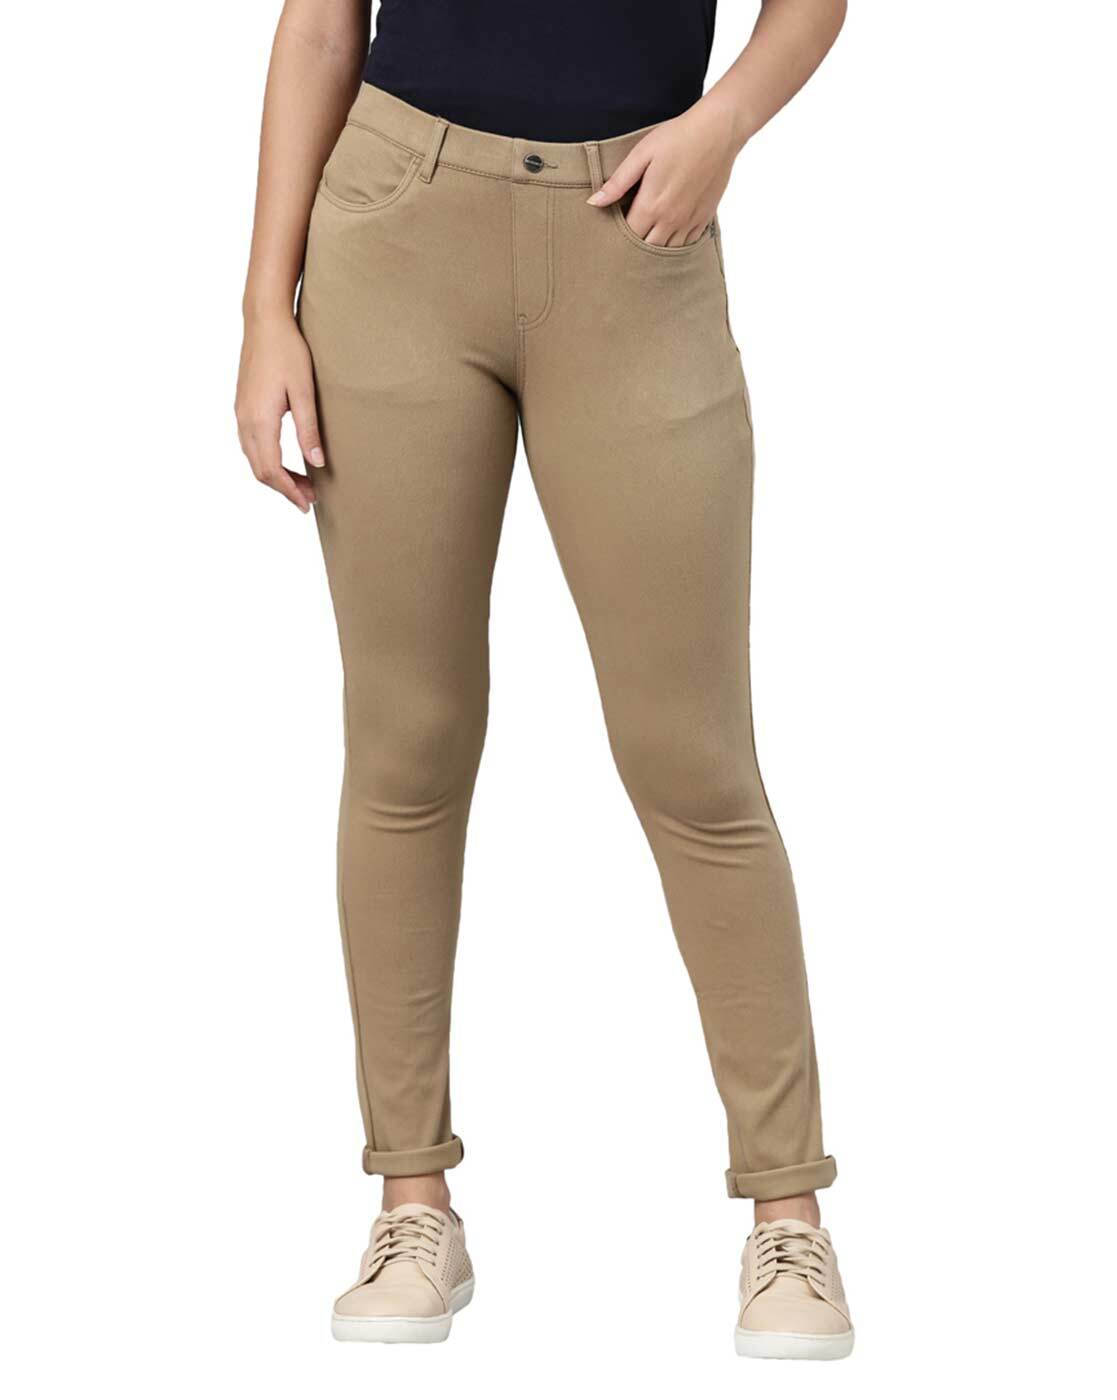 Buy Liverpool Jeans Company Women's Cami Crop Khaki Denim Jean, Light Khaki,  0 at Amazon.in